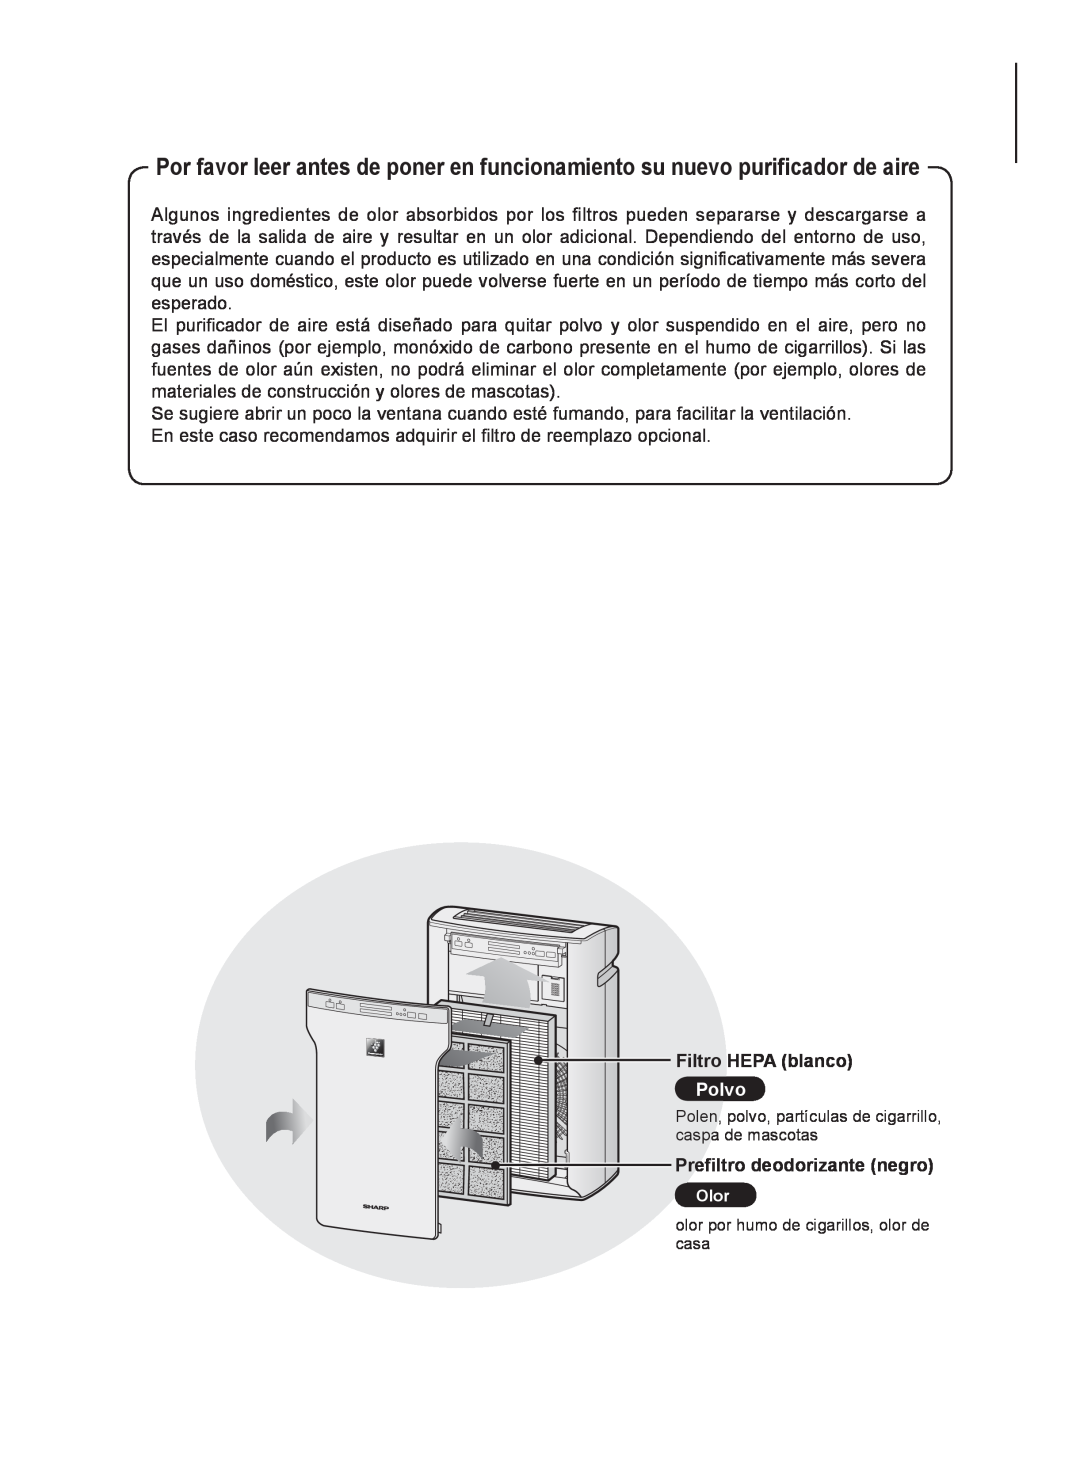 Sharp FP-A60U, FP-A80UW operation manual Filtro HEPA blanco, Polvo, Prefiltro deodorizante negro 